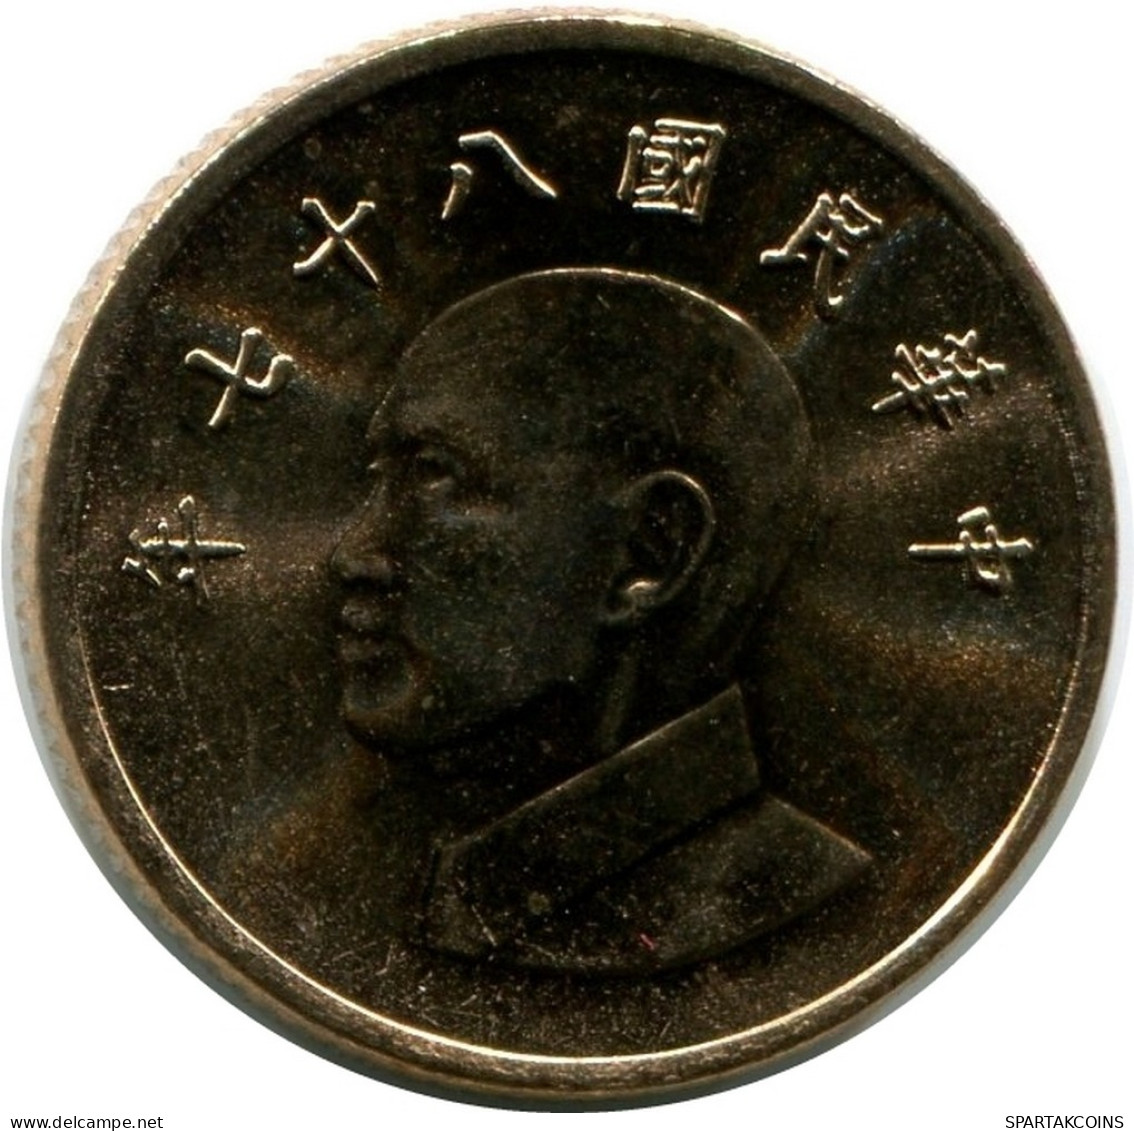 1 YUAN 1996 TAIWAN UNC Coin #M10414.U - Taiwan